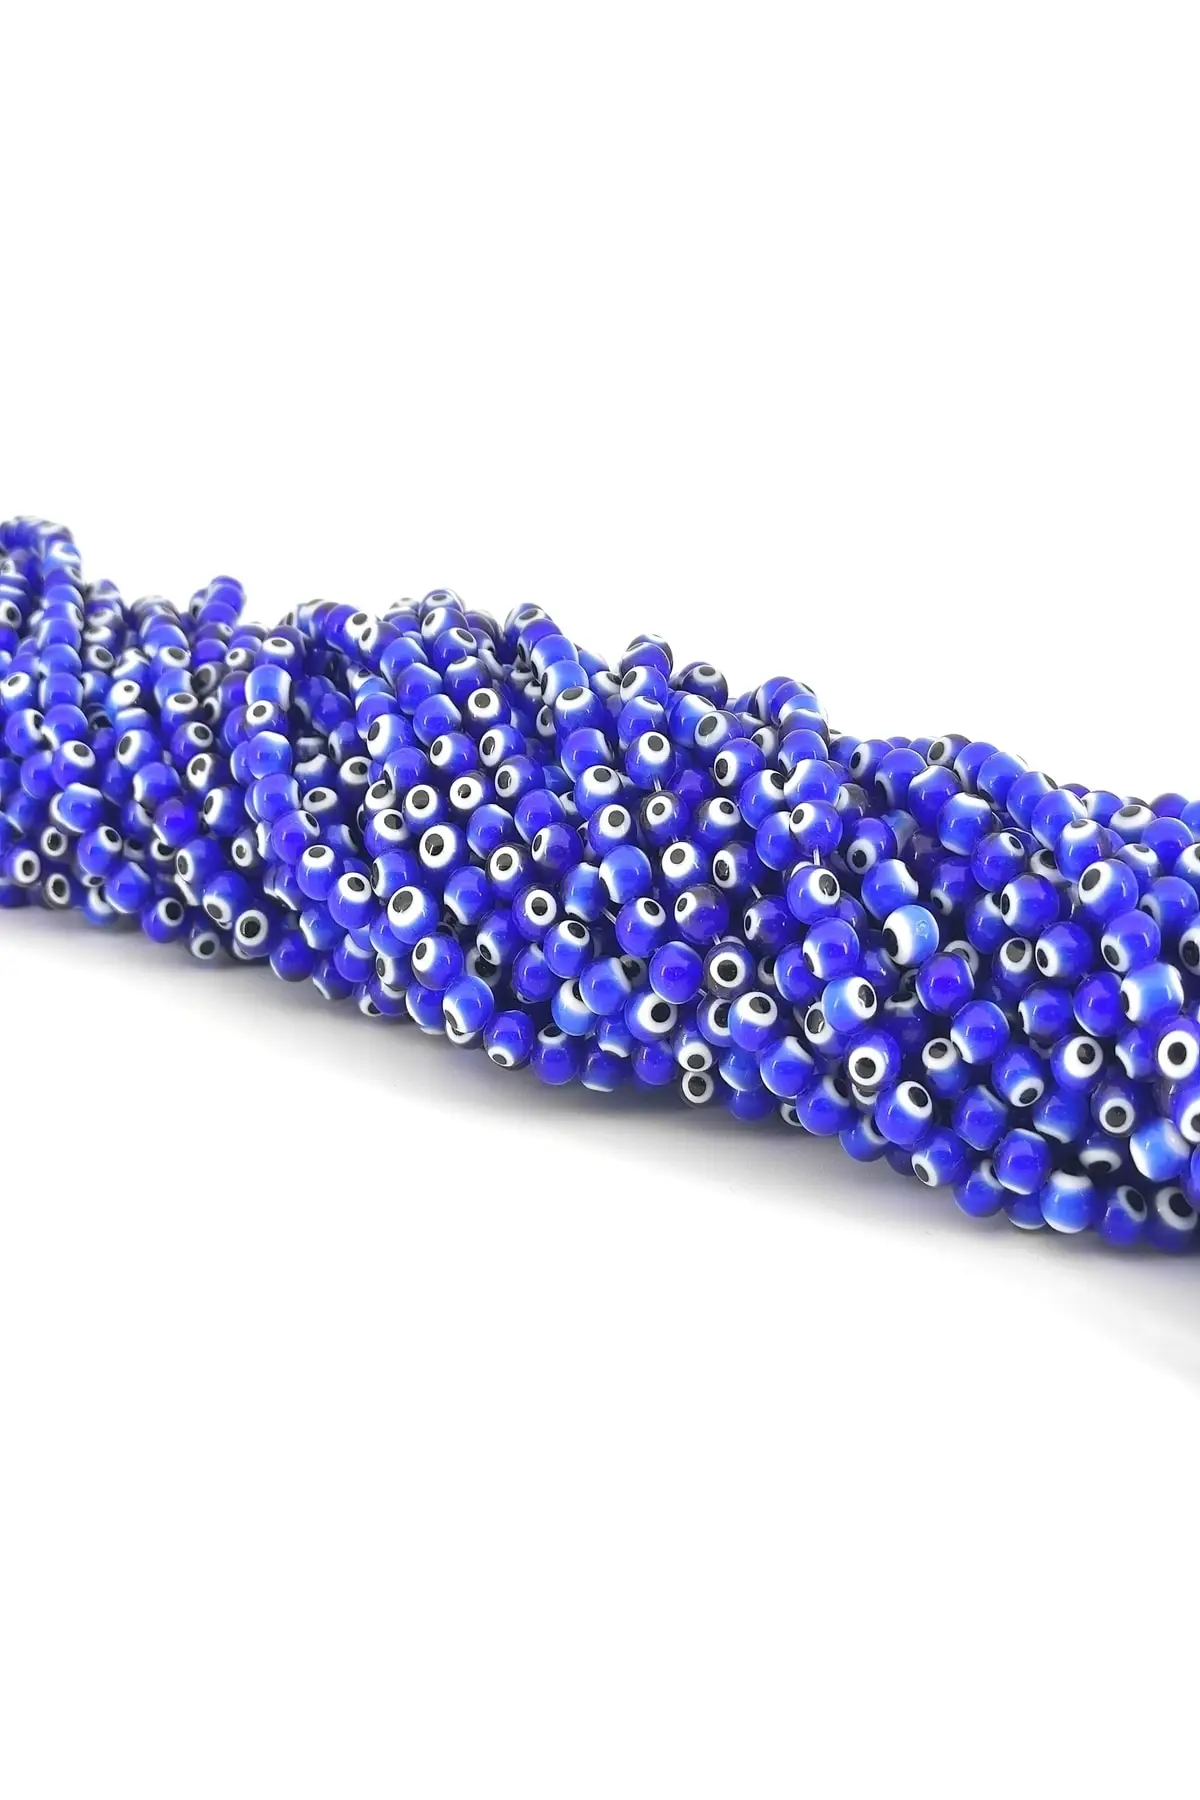 

Glass Nazar Bead Navy Blue 6 mm Beads Hobby Supplies & Entertainment Life